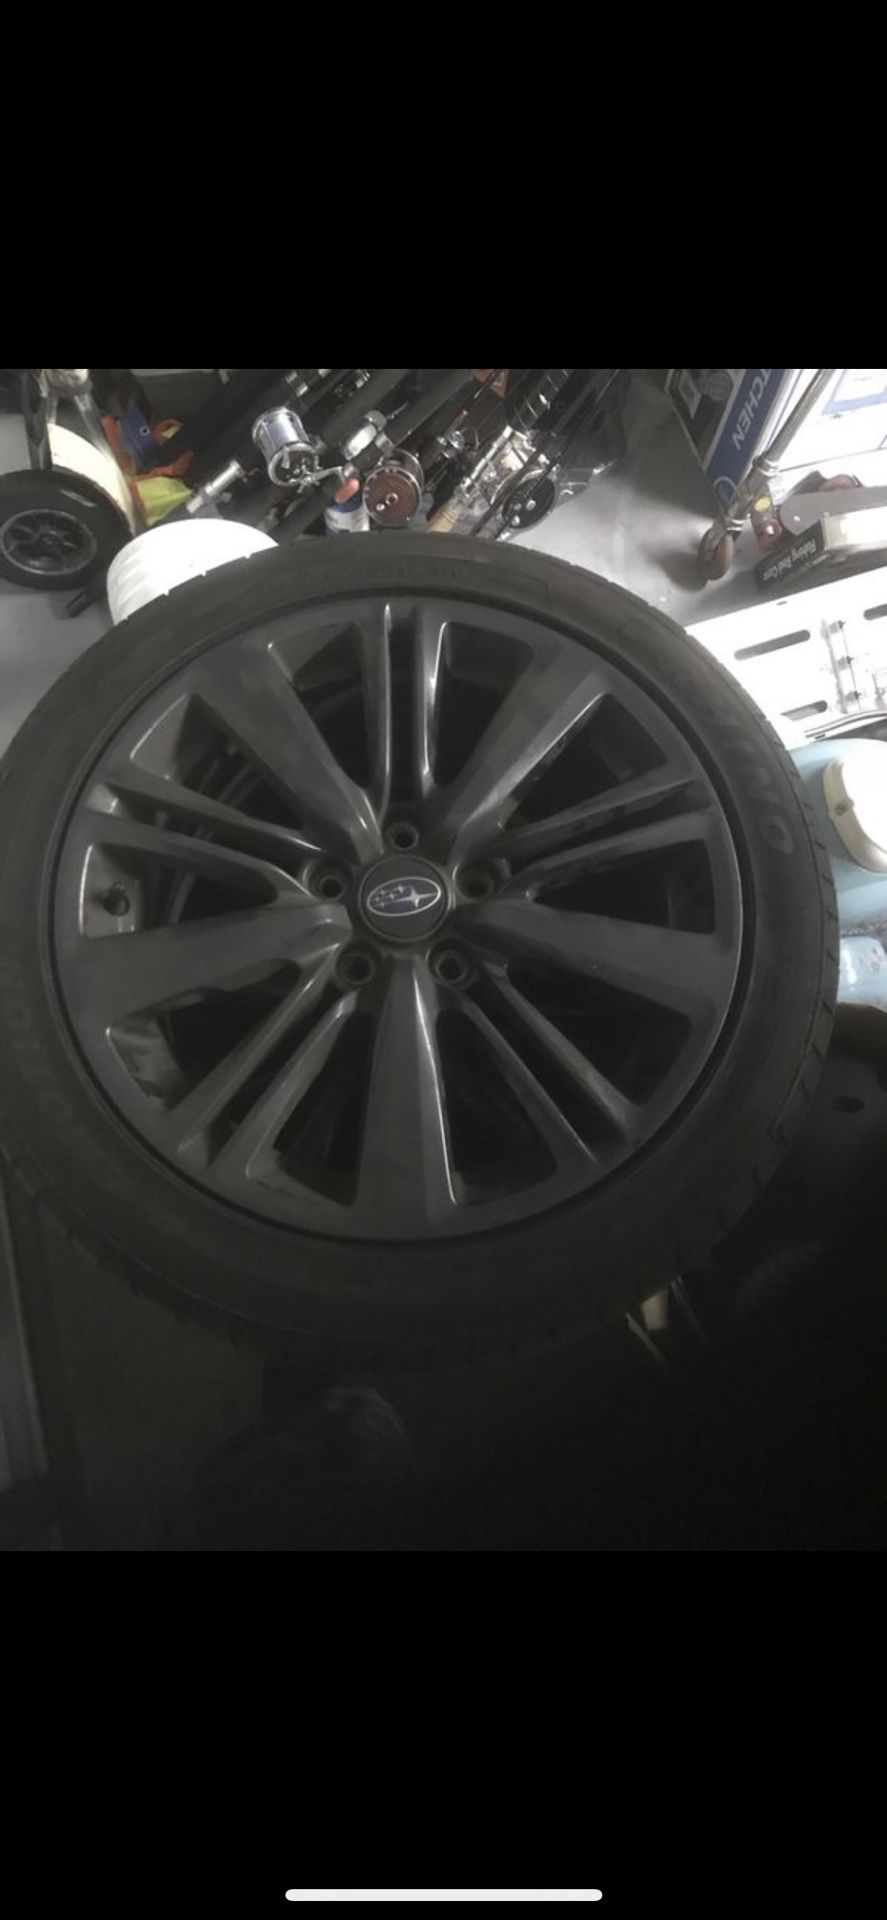 Oem Wrx wheels full set need tires 250$